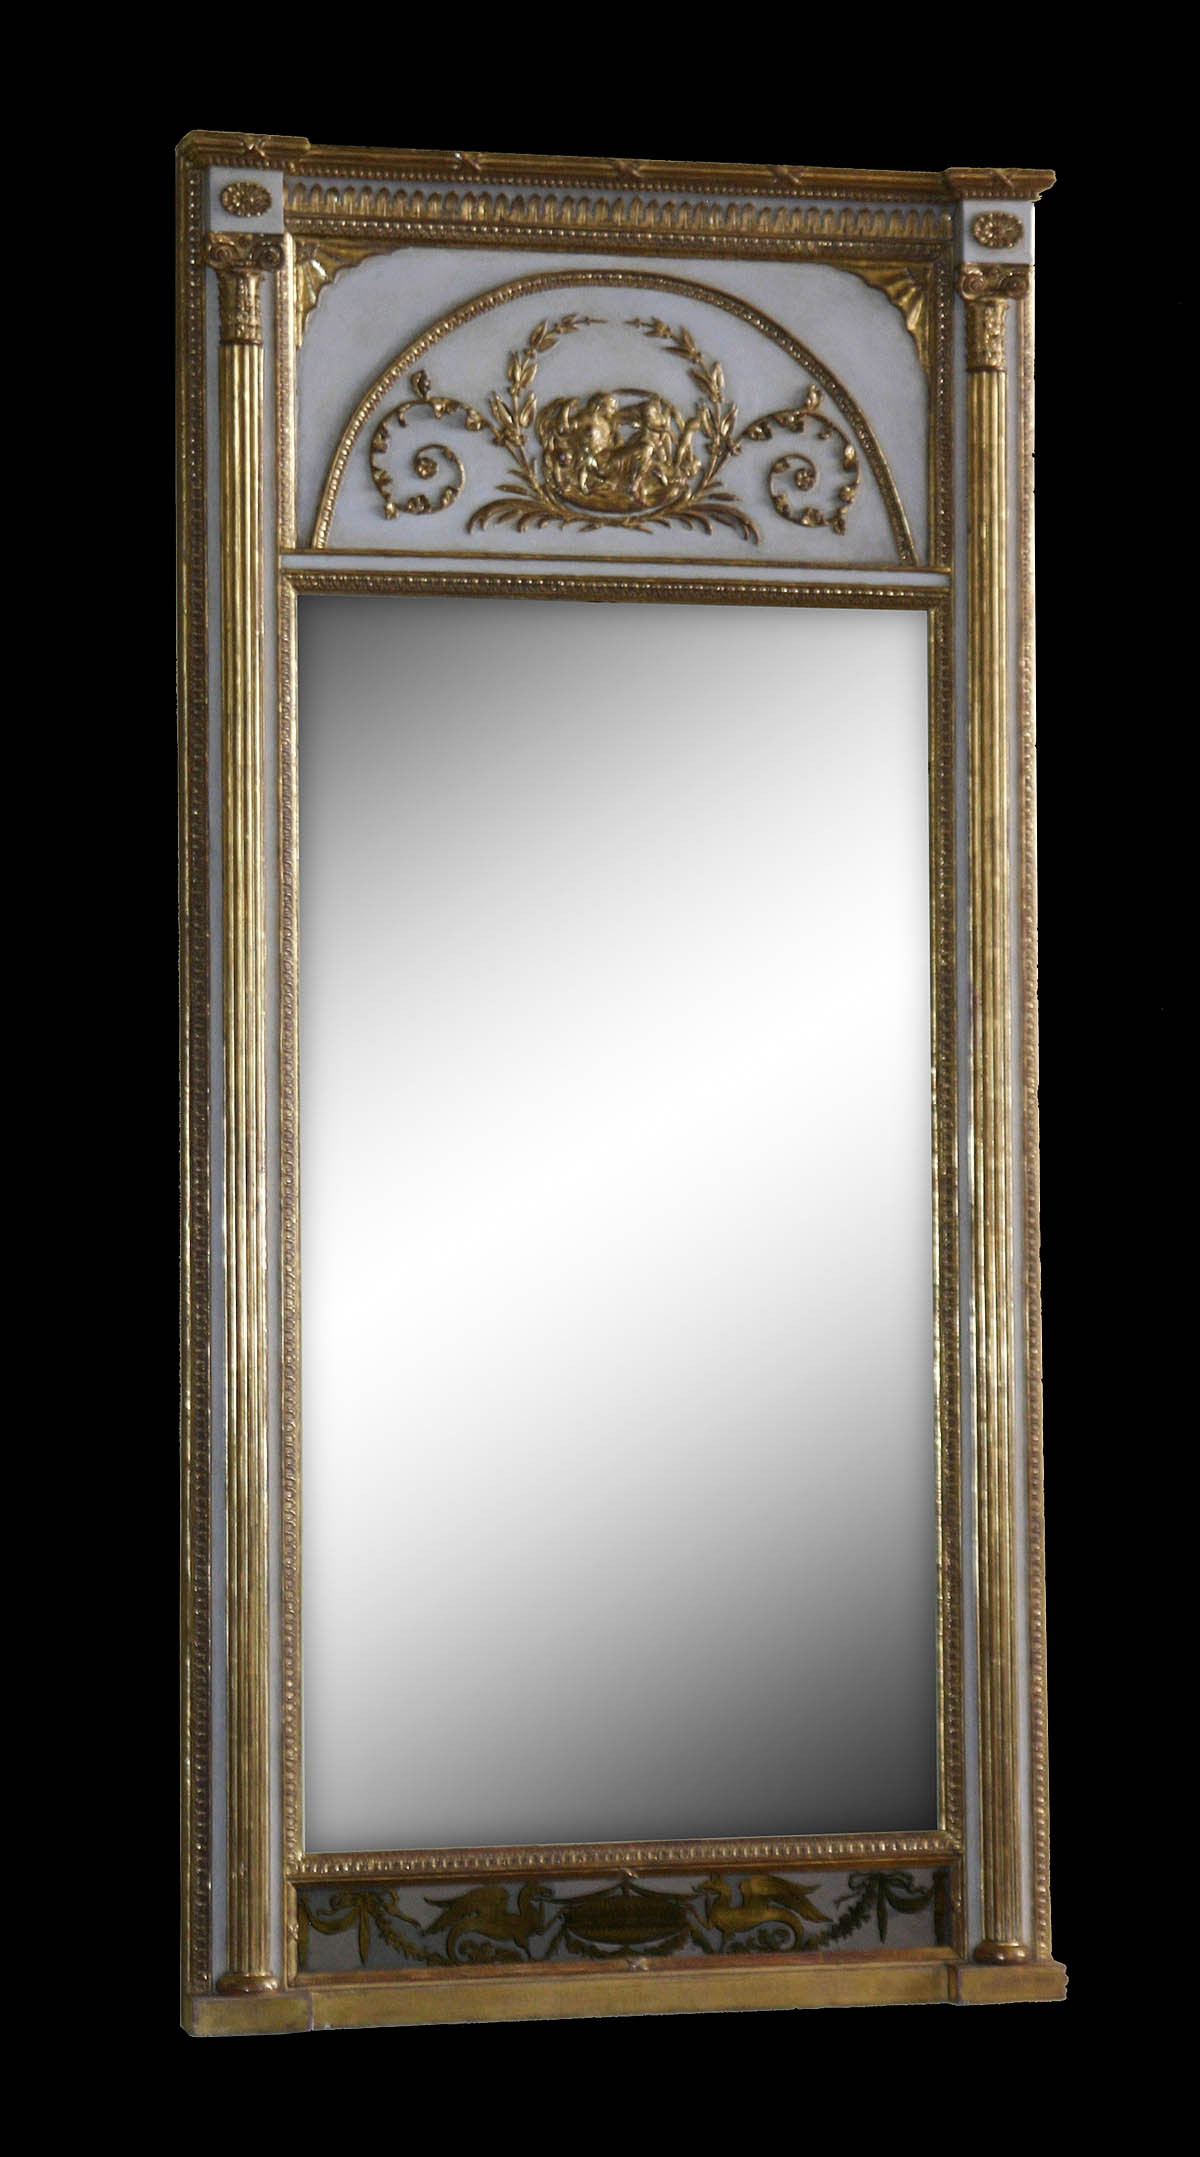 Verre Eglomise Mirror